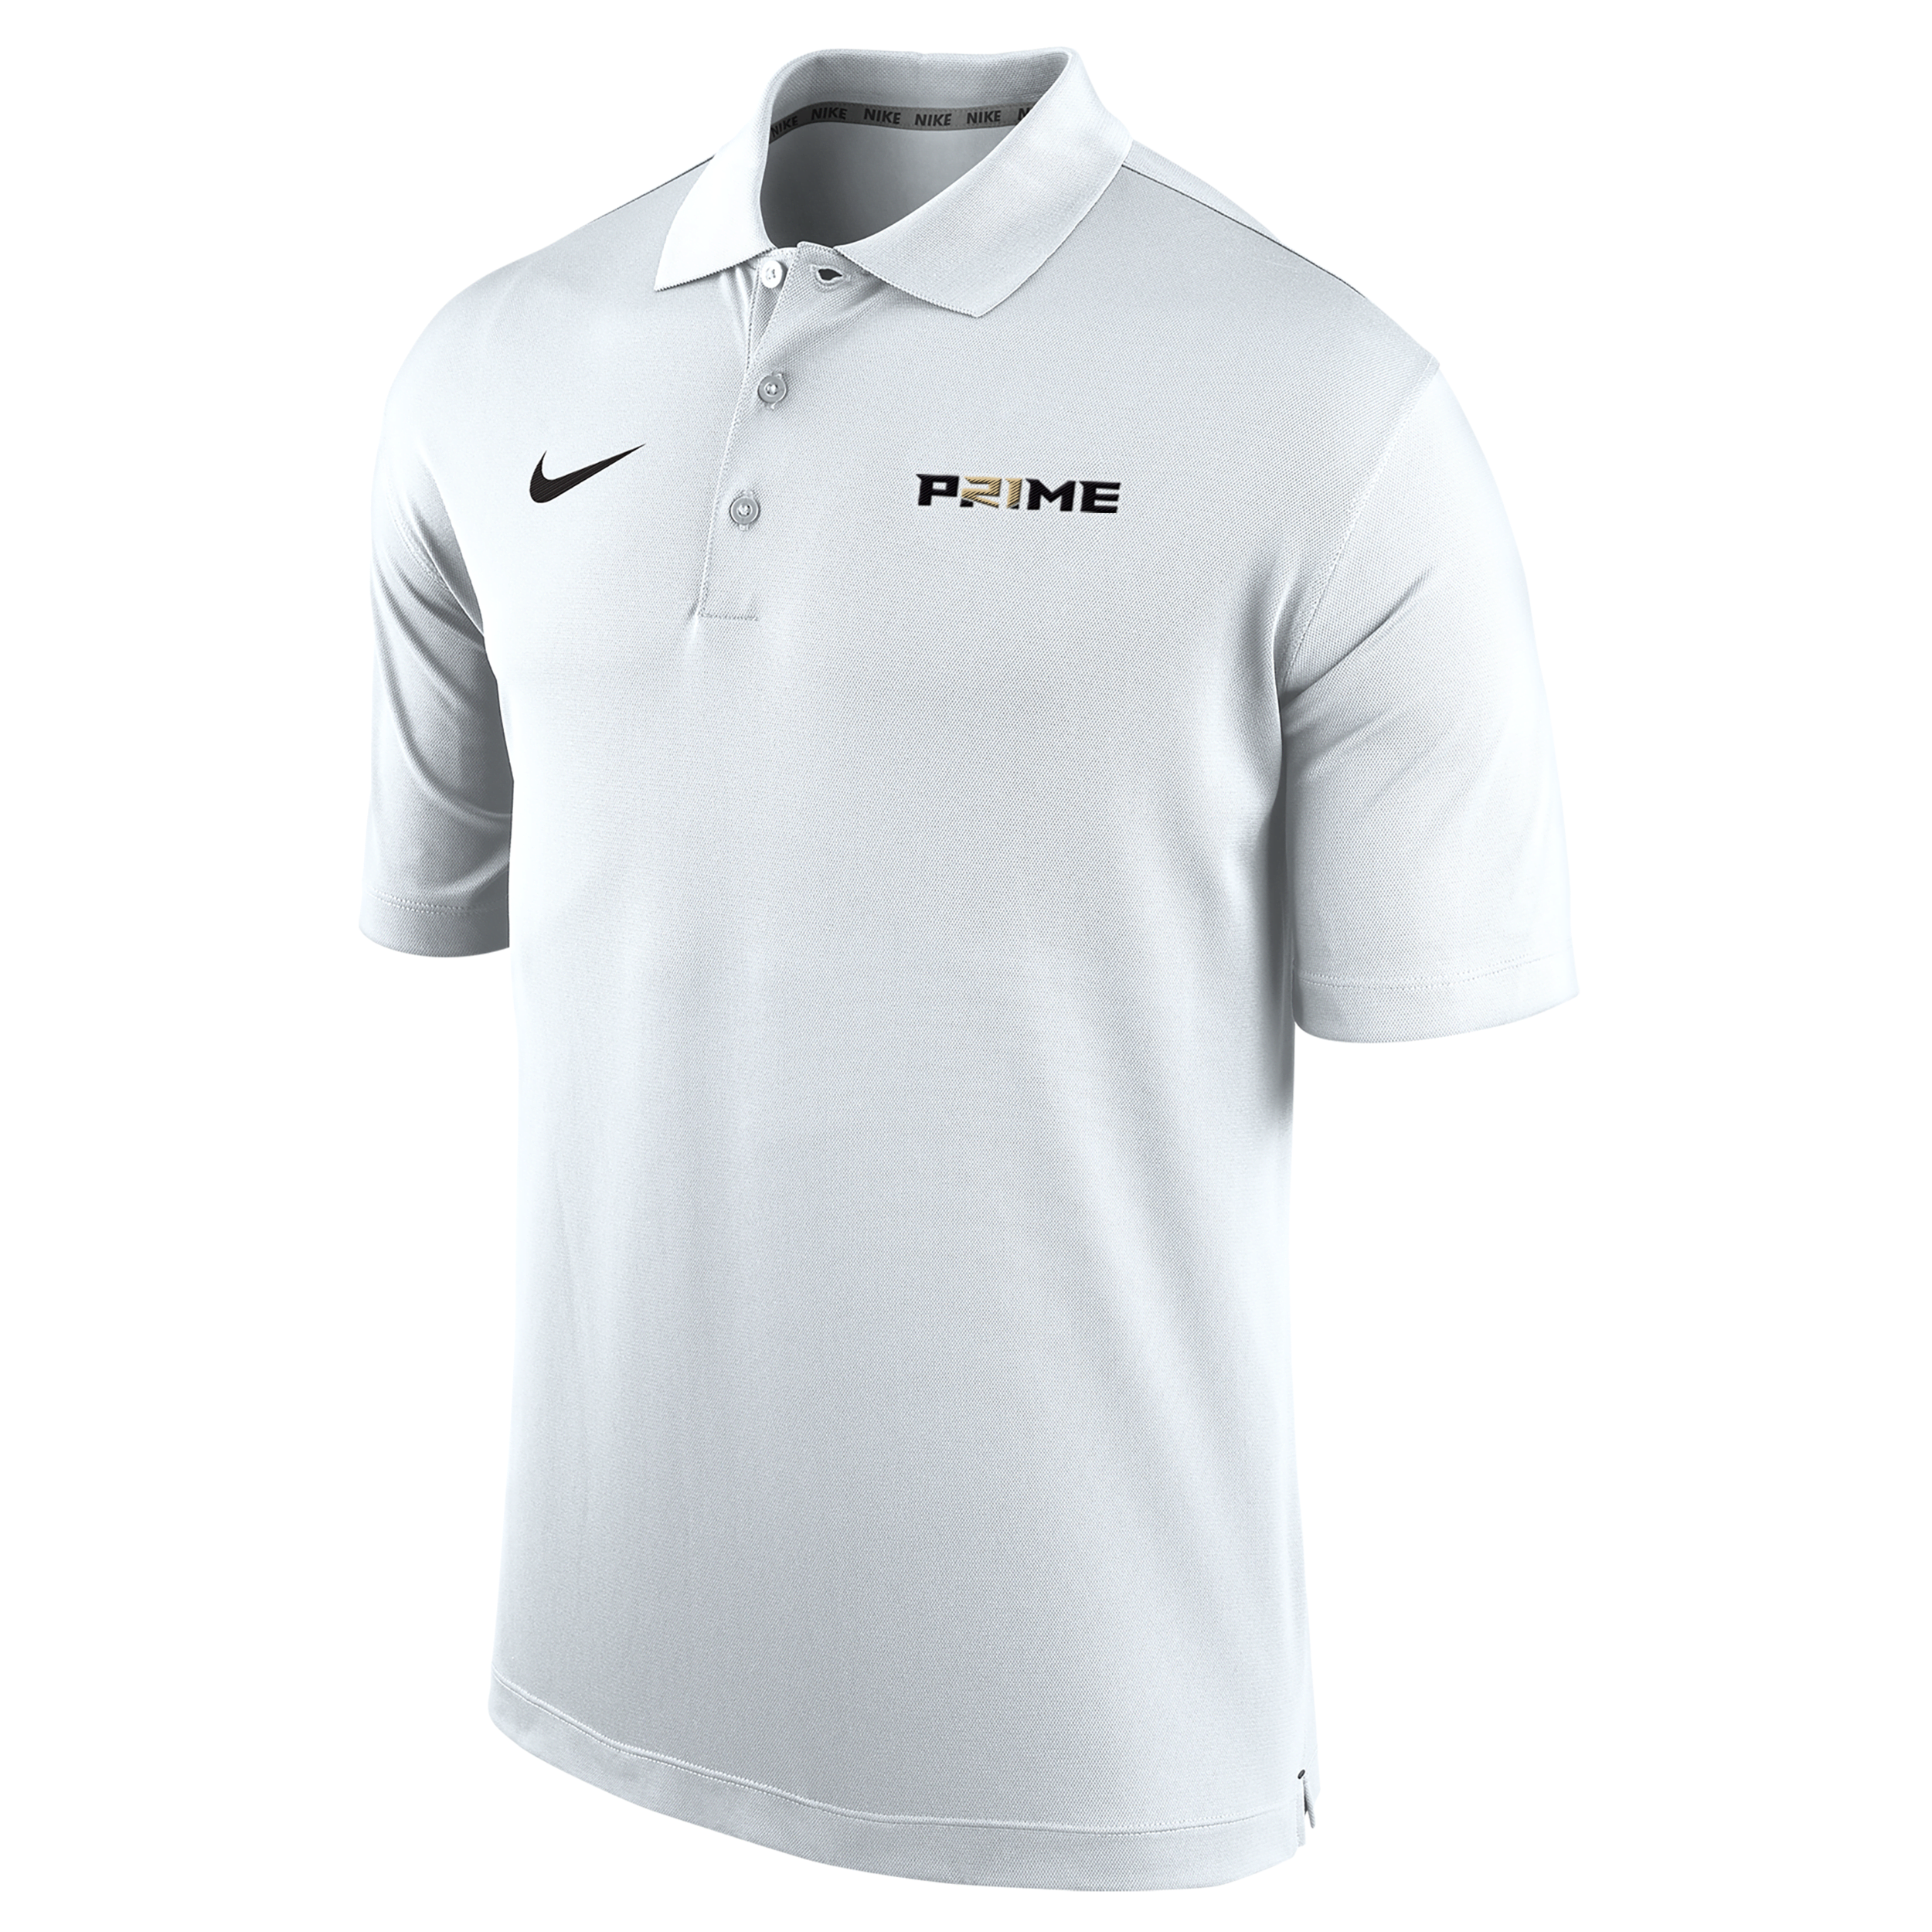 Nike Deion Sanders "p21me"  Men's Dri-fit Polo Shirt In White